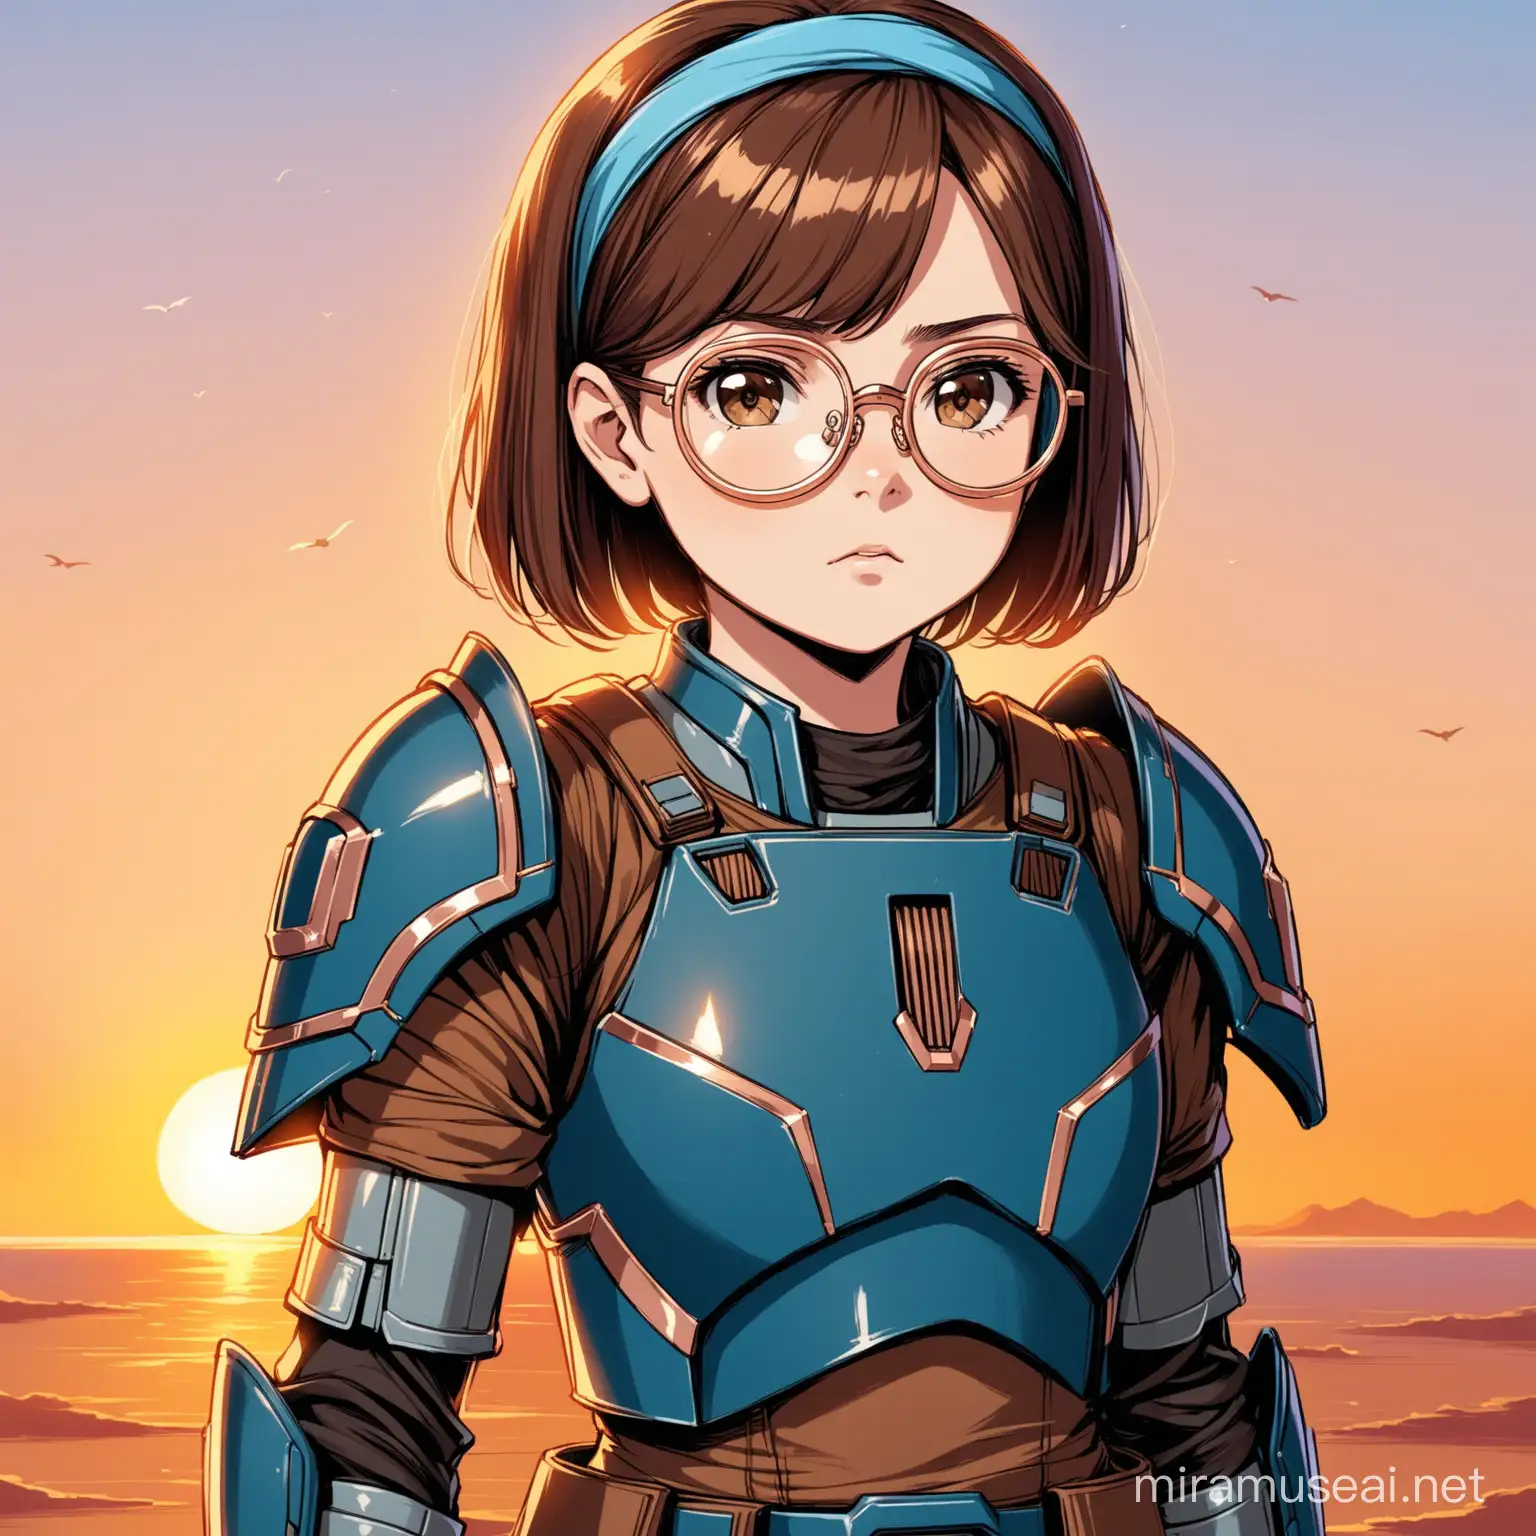 Determined Girl in Blue Mandalorian Armor at Sunset